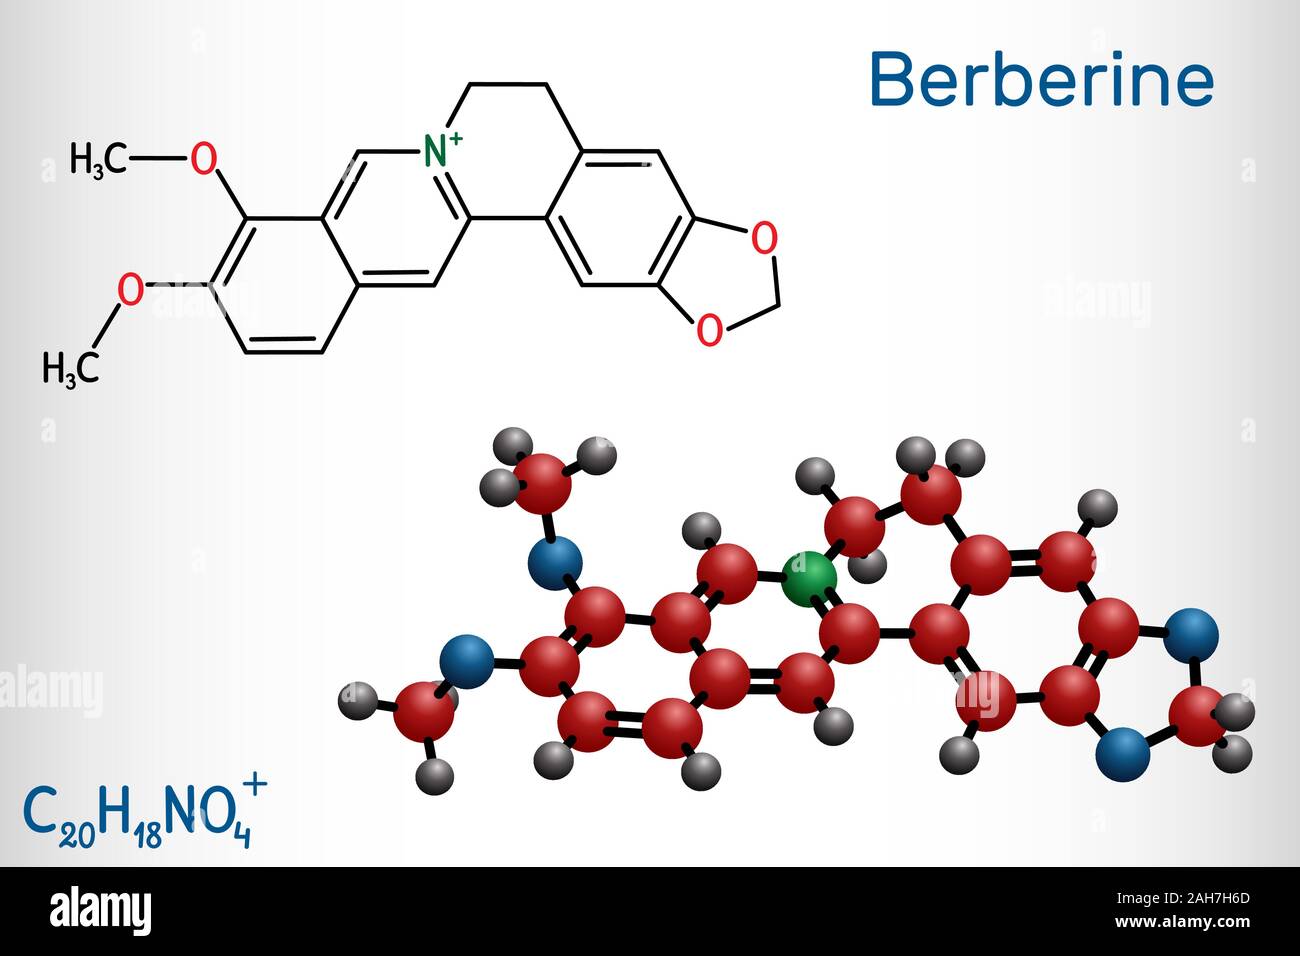 Berberine C20H18NO4, herbal alkaloid molecule. Structural chemical formula and molecule model. Vector illustration Stock Vector